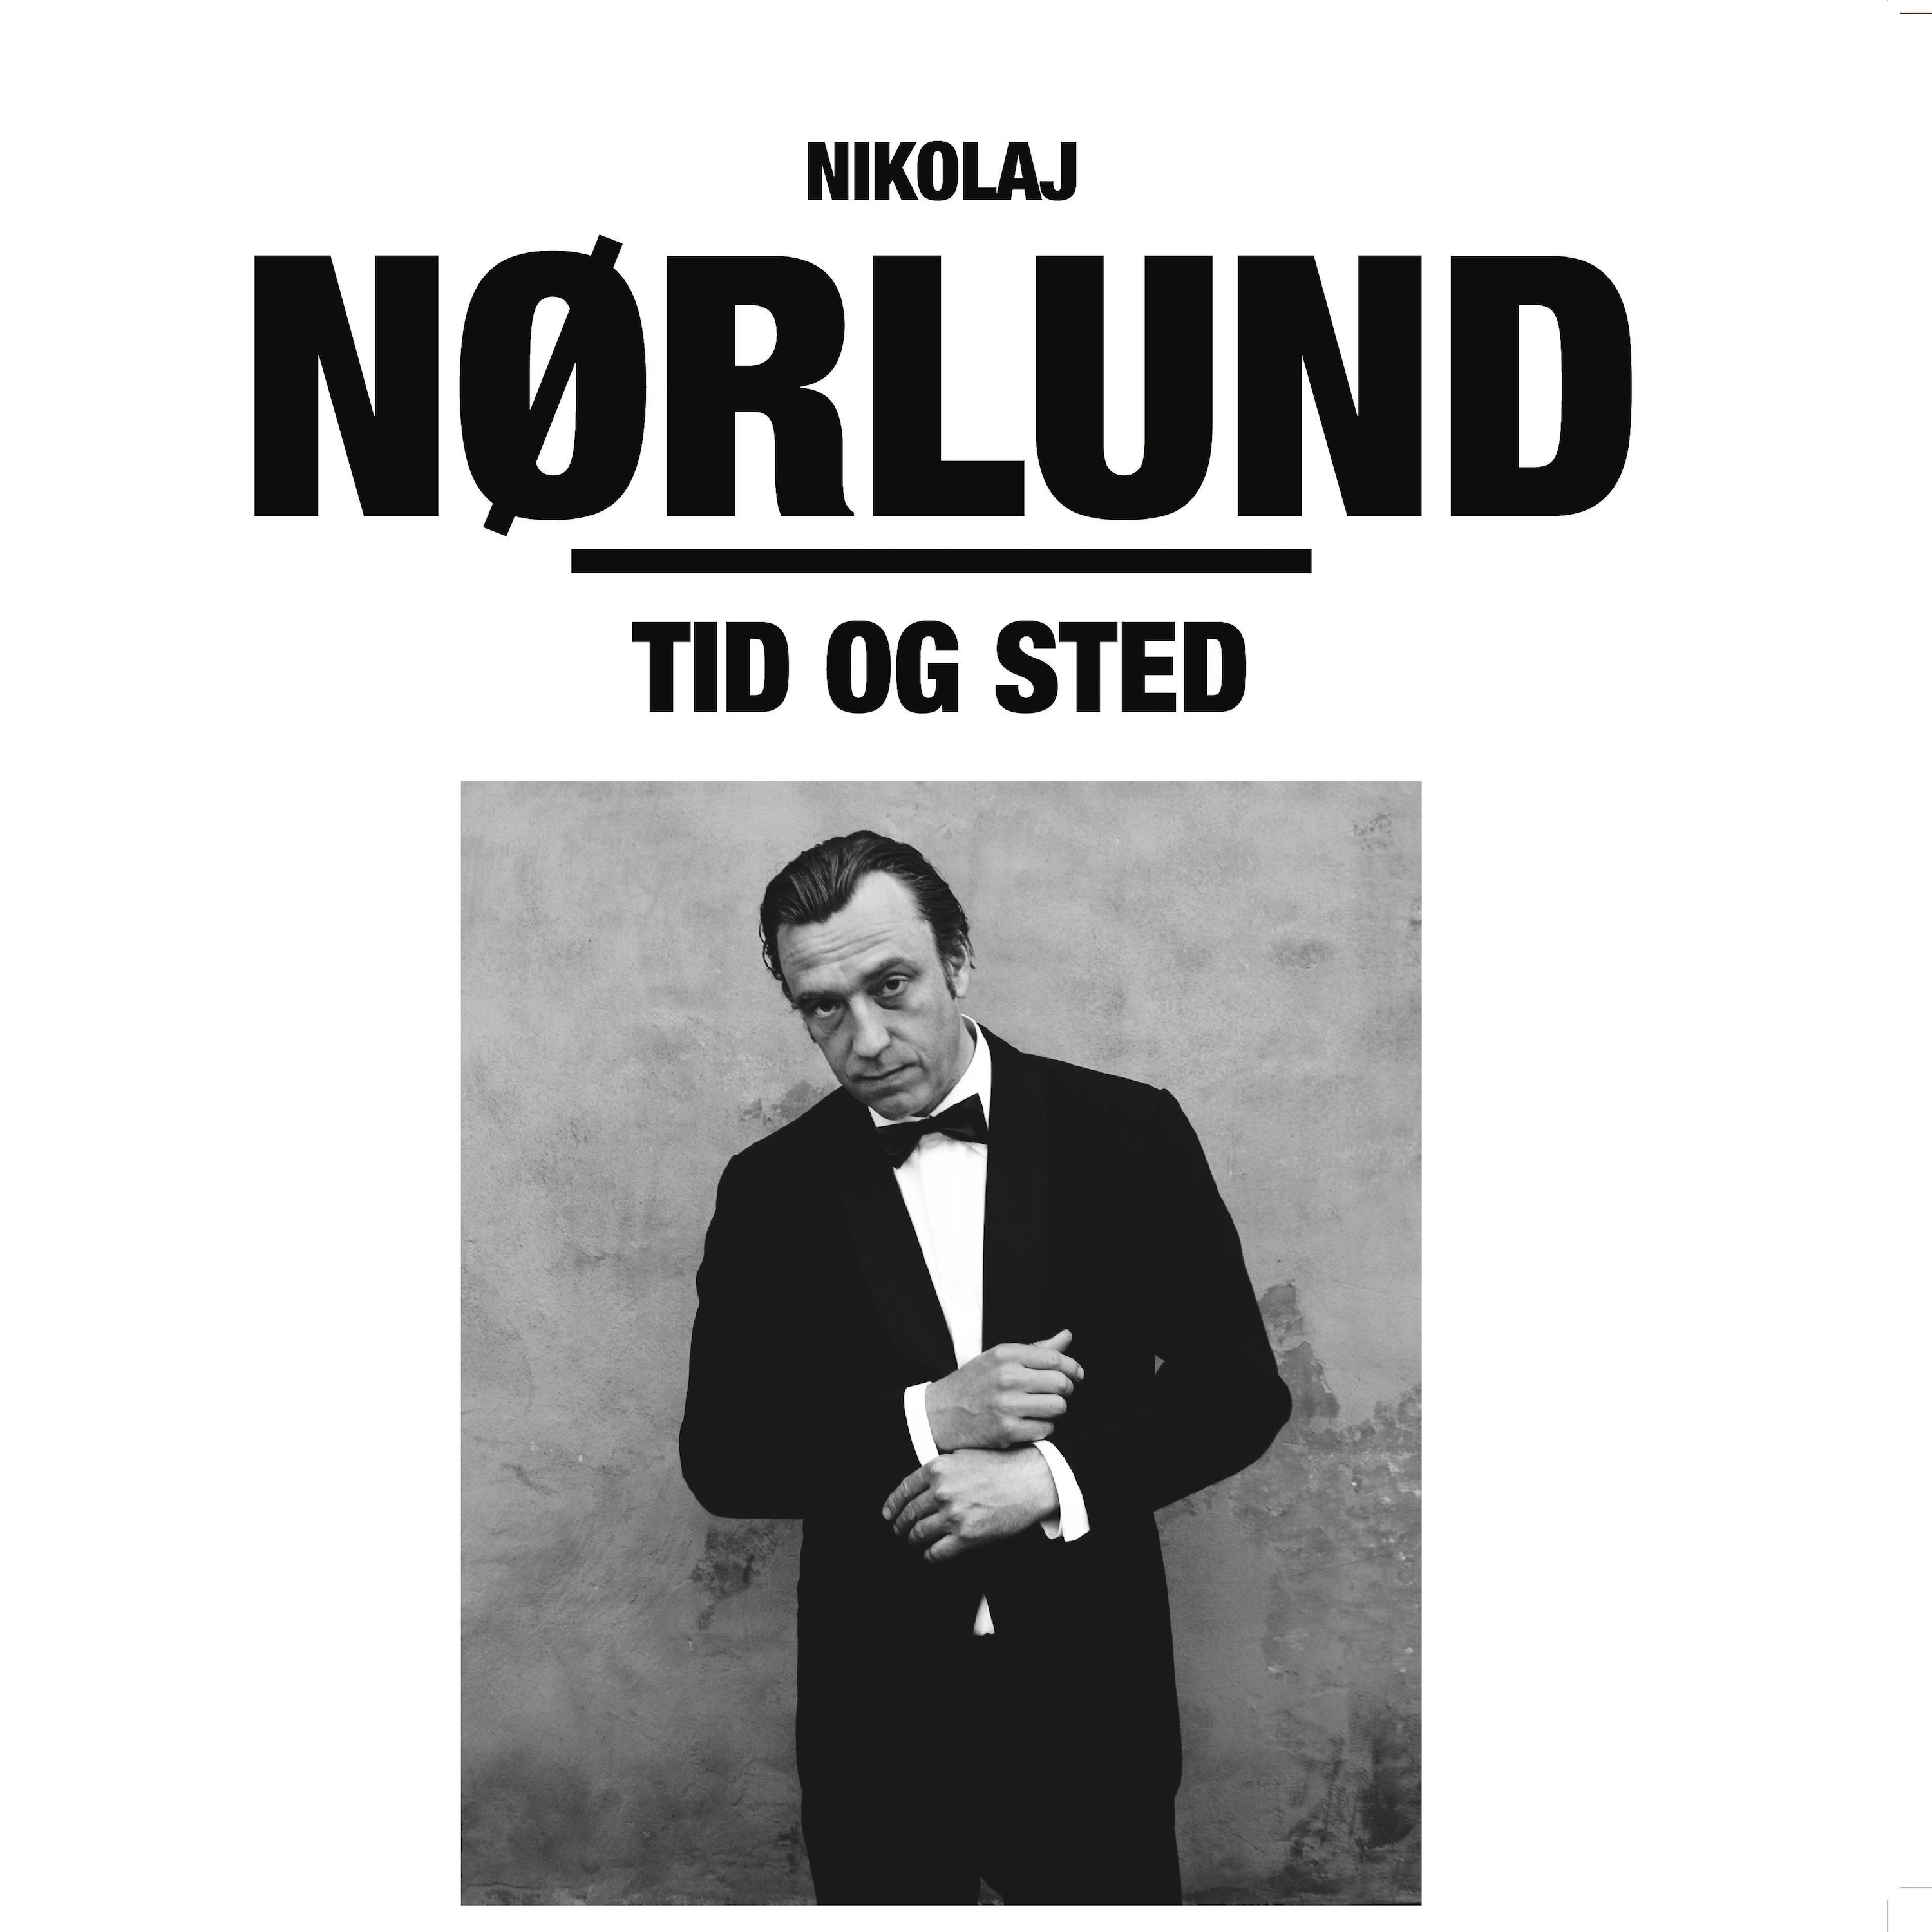 Nikolaj N rlund - Tid og sted - CD